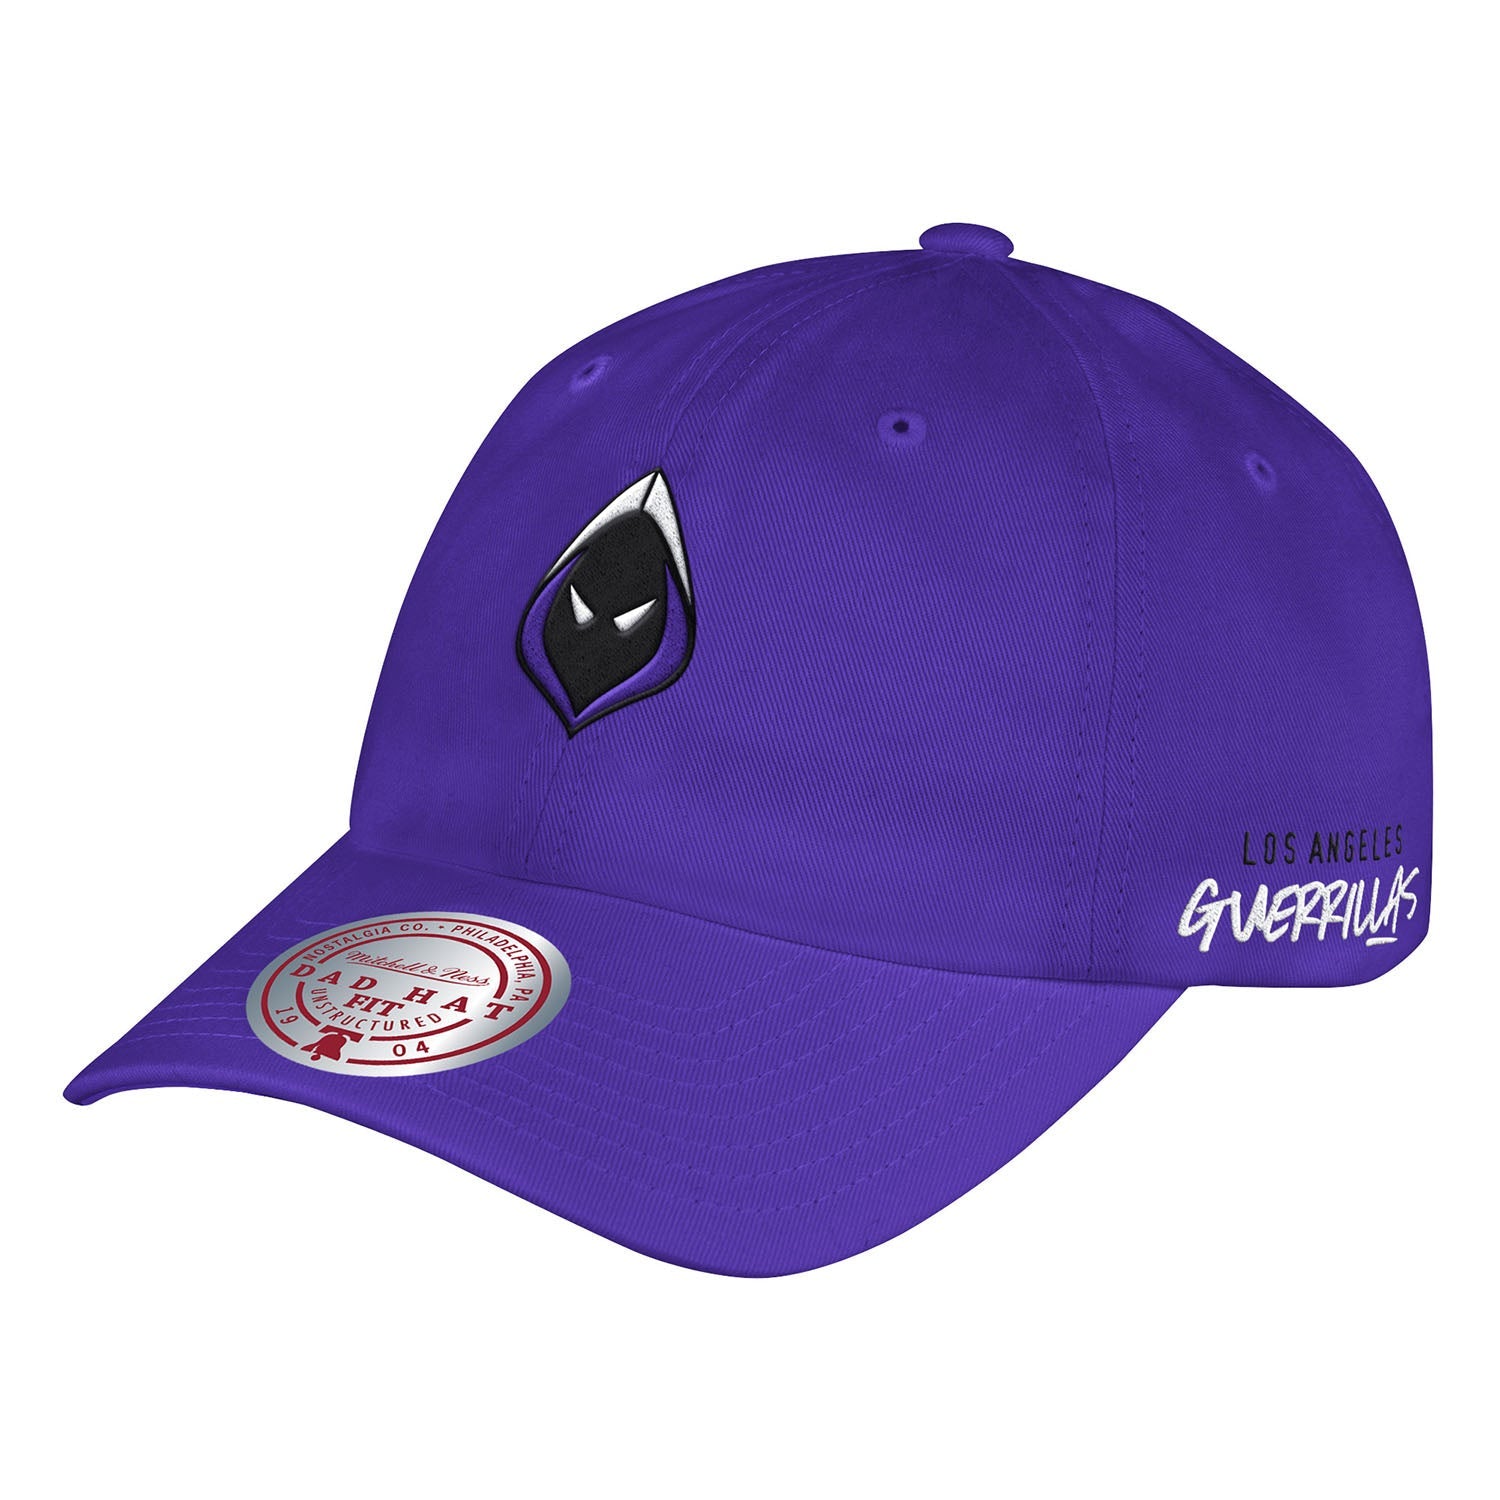 La Guerrillas Mitchell & Ness Purple Dad Hat